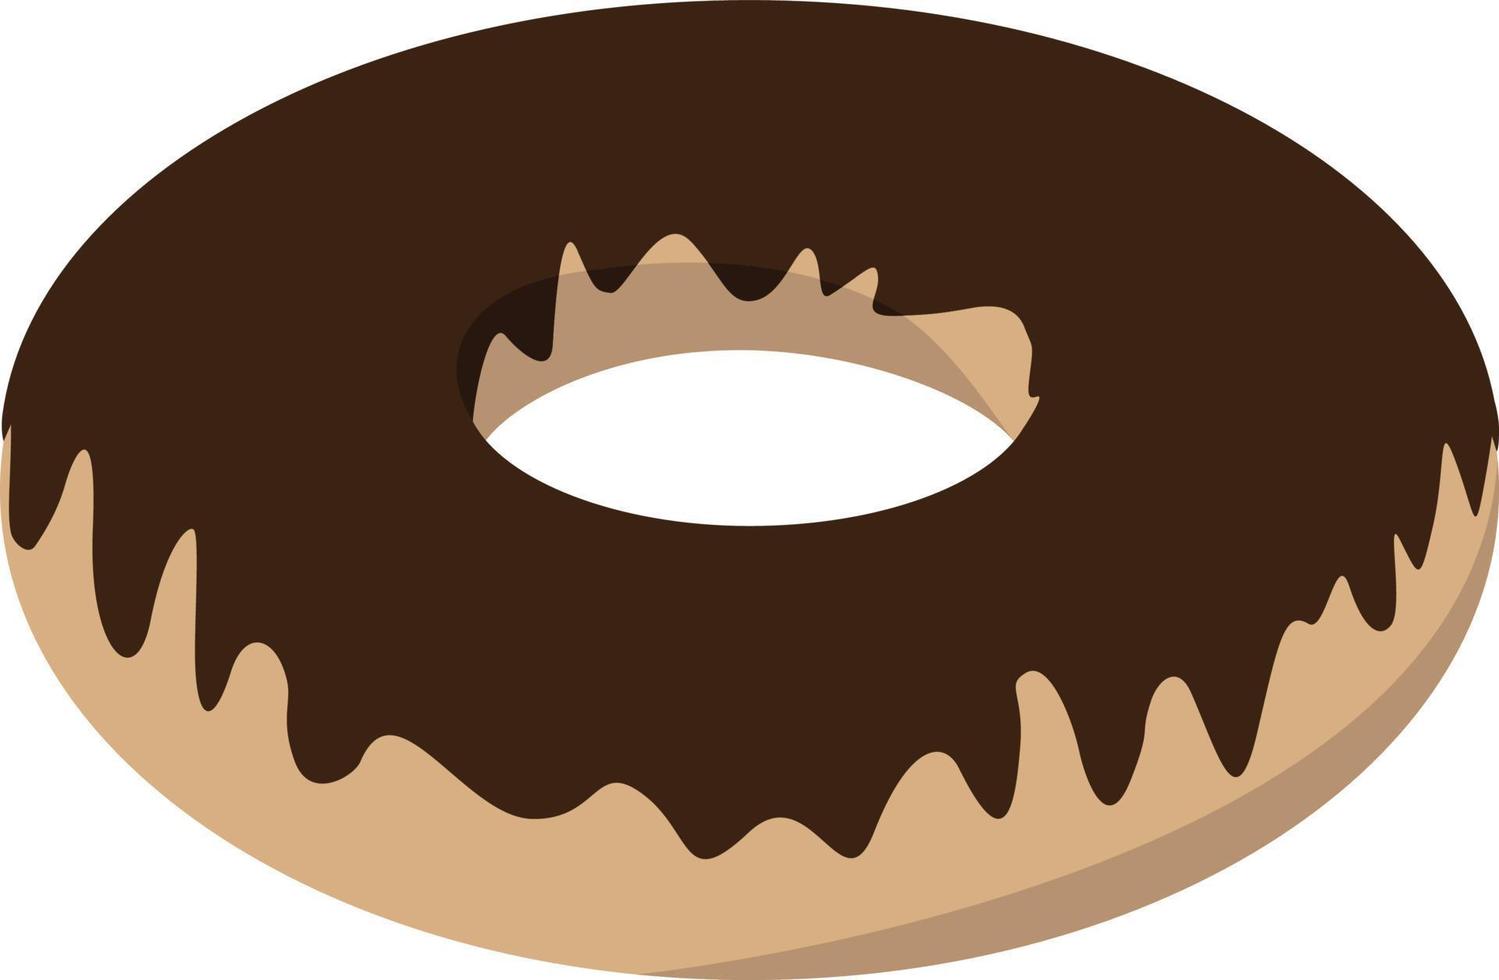 Chocolate donut, illustration, vector on white background.